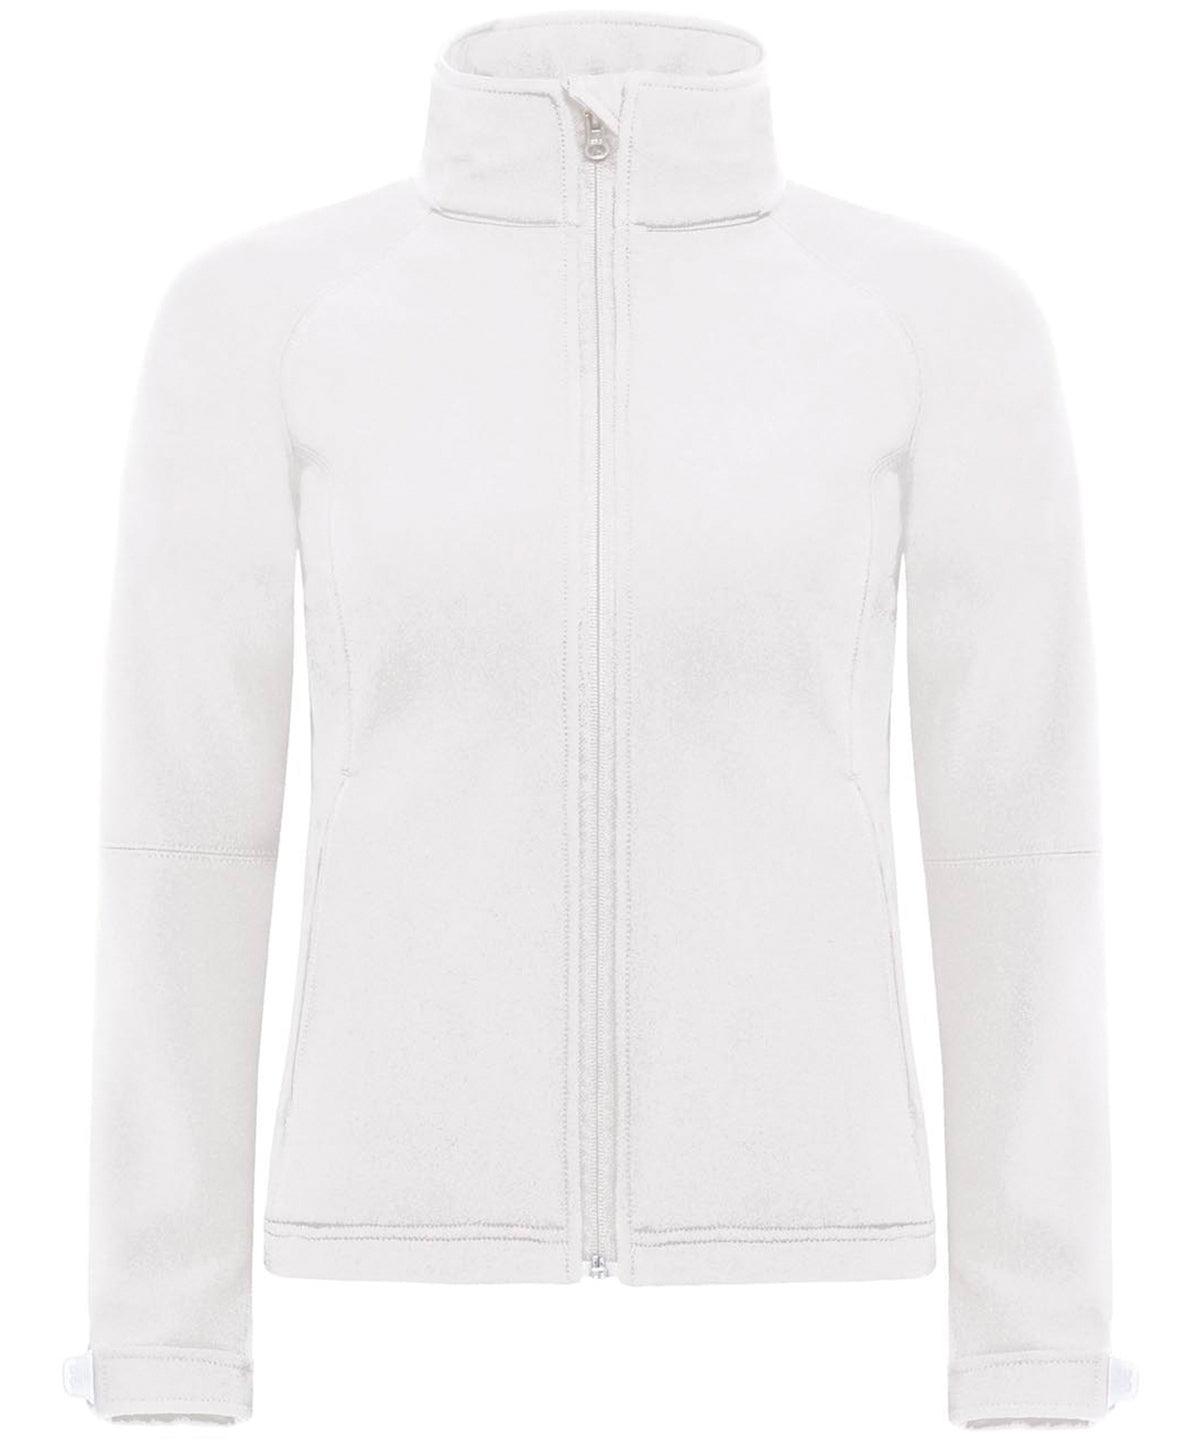 White - B&C Hooded softshell /women Jackets B&C Collection Jackets & Coats, Softshells, Women's Fashion Schoolwear Centres